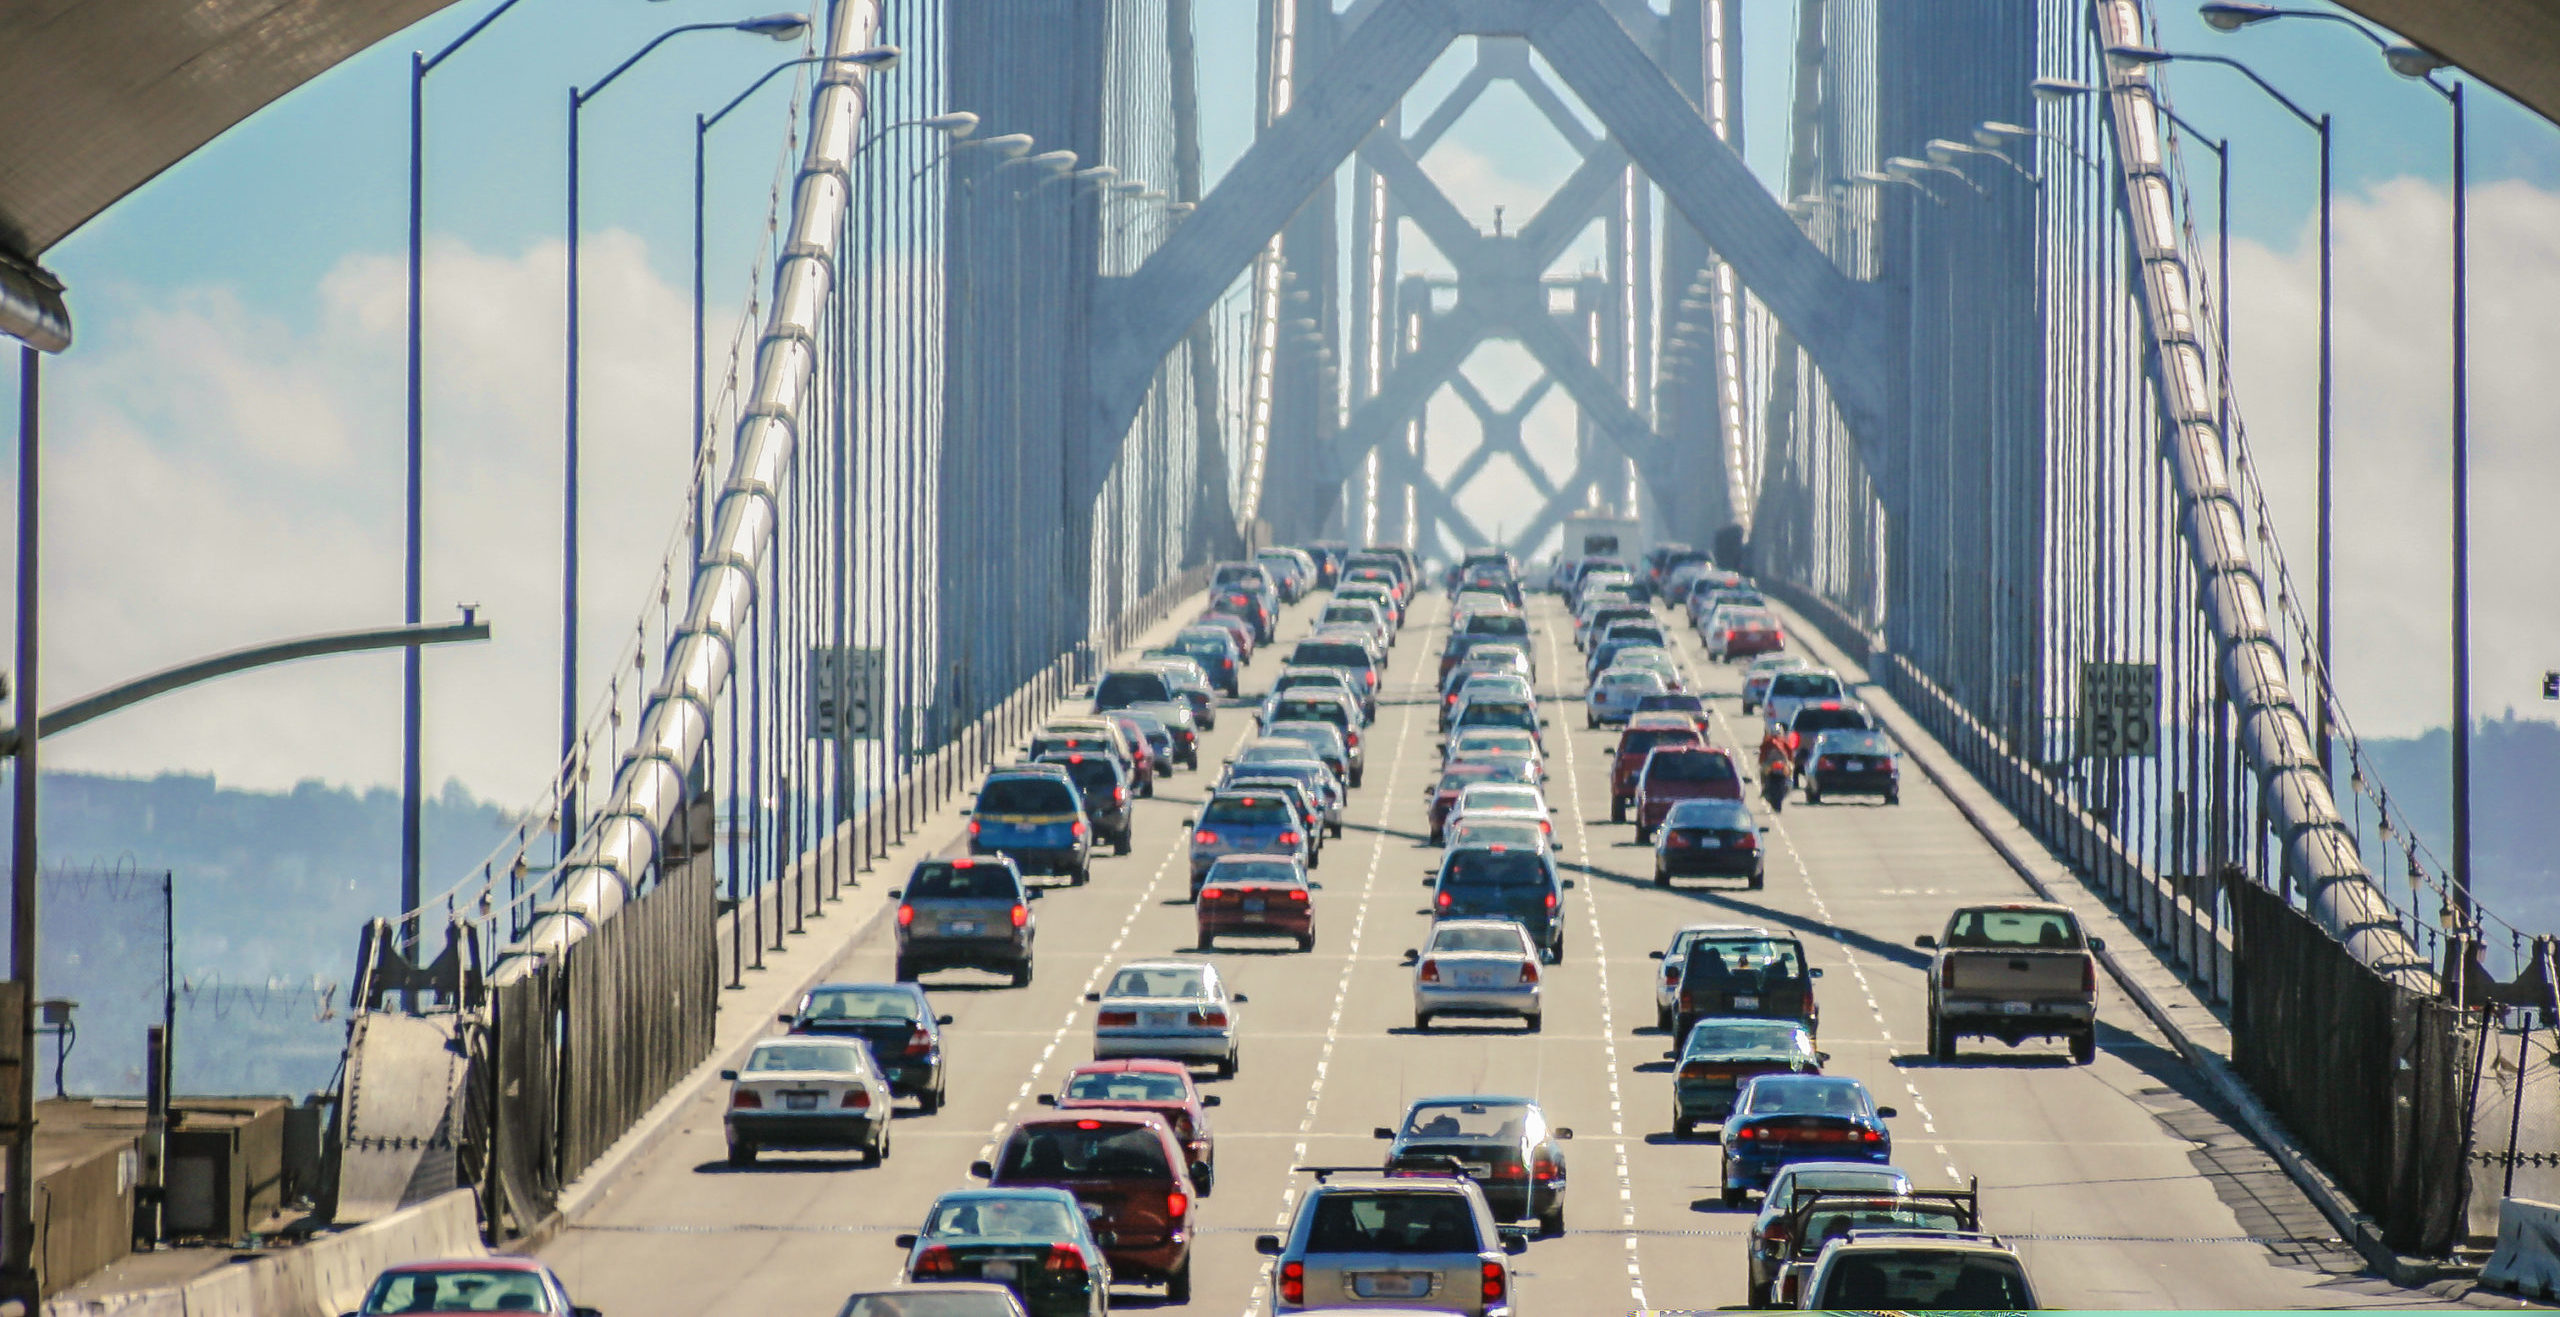 Bay Bridge of San Francisco, USA